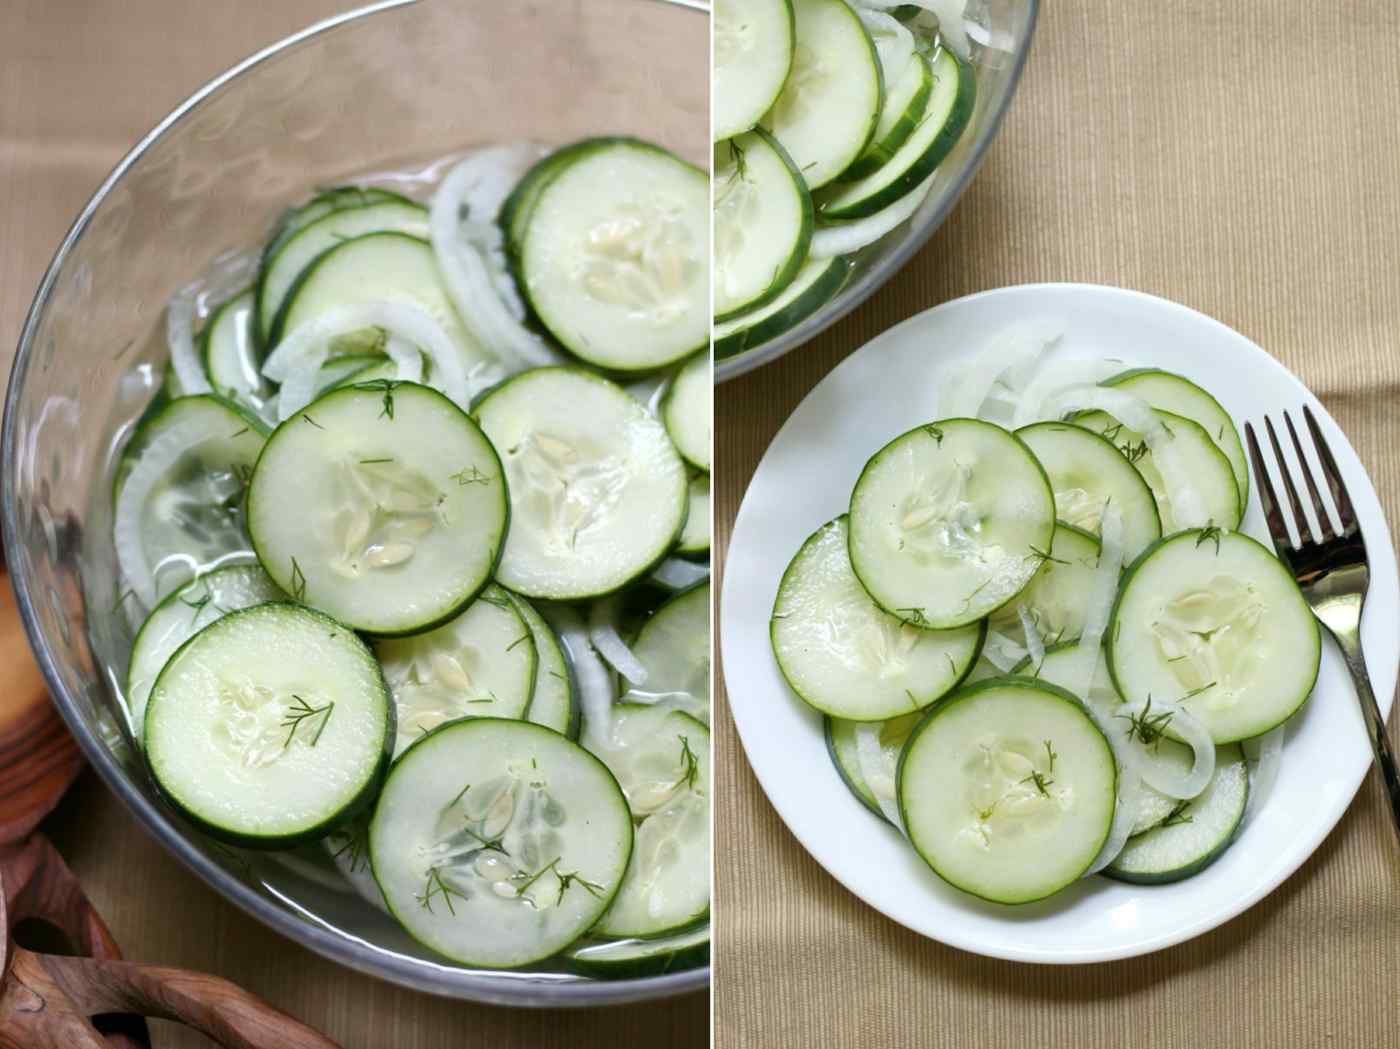 Vegan cucumber salad with homemade dressing made of vinegar and sweetener